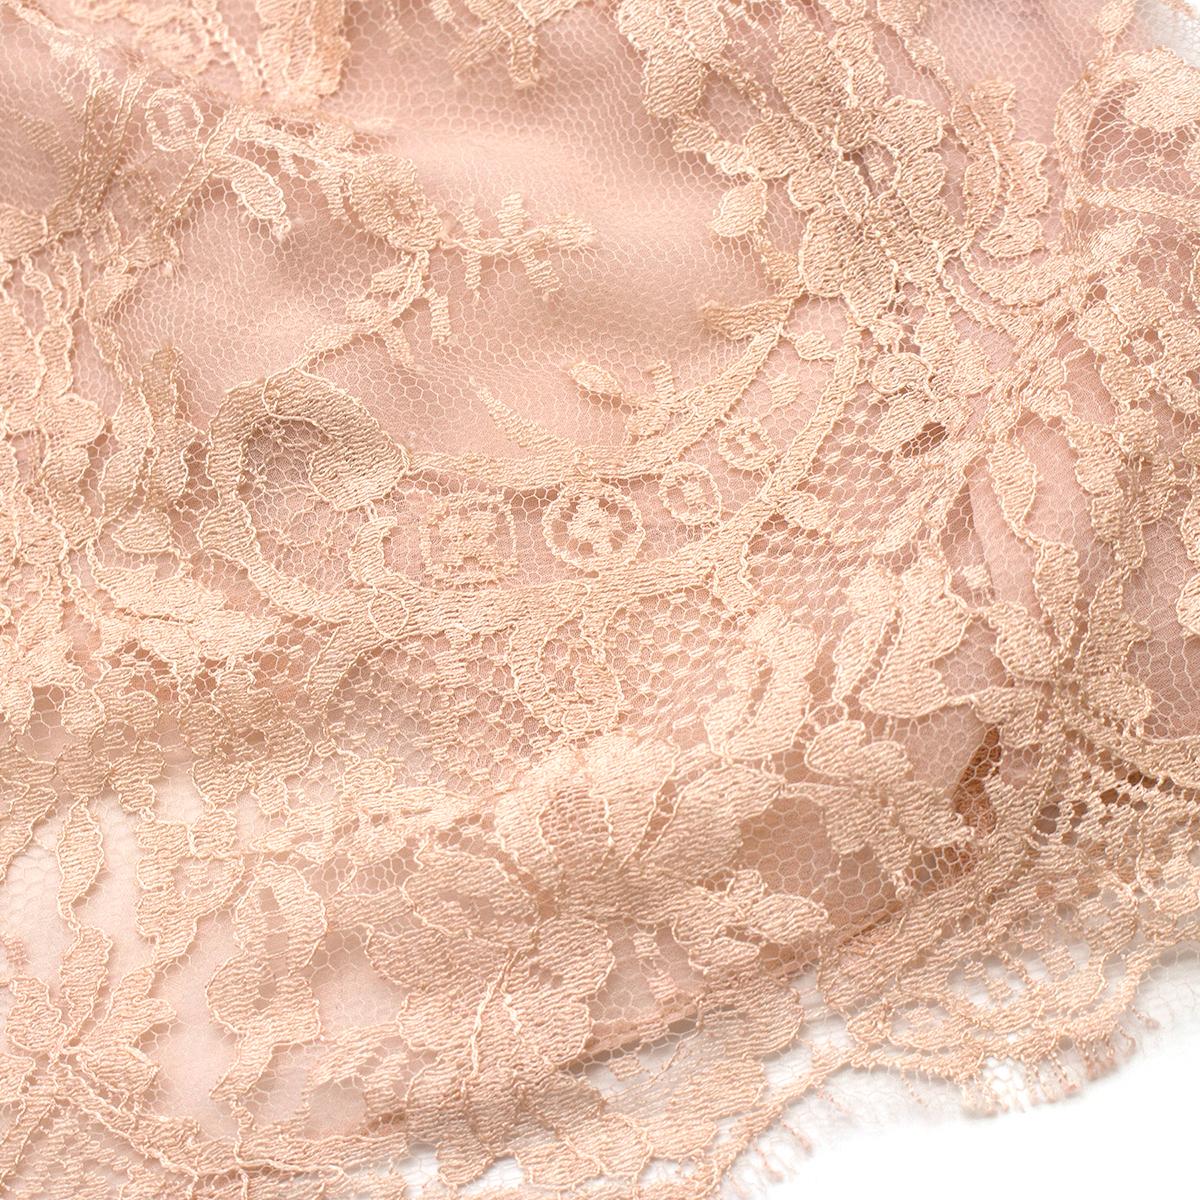 Women's Rosamosario Nude Pink Lace Slip Dress - Size US 6